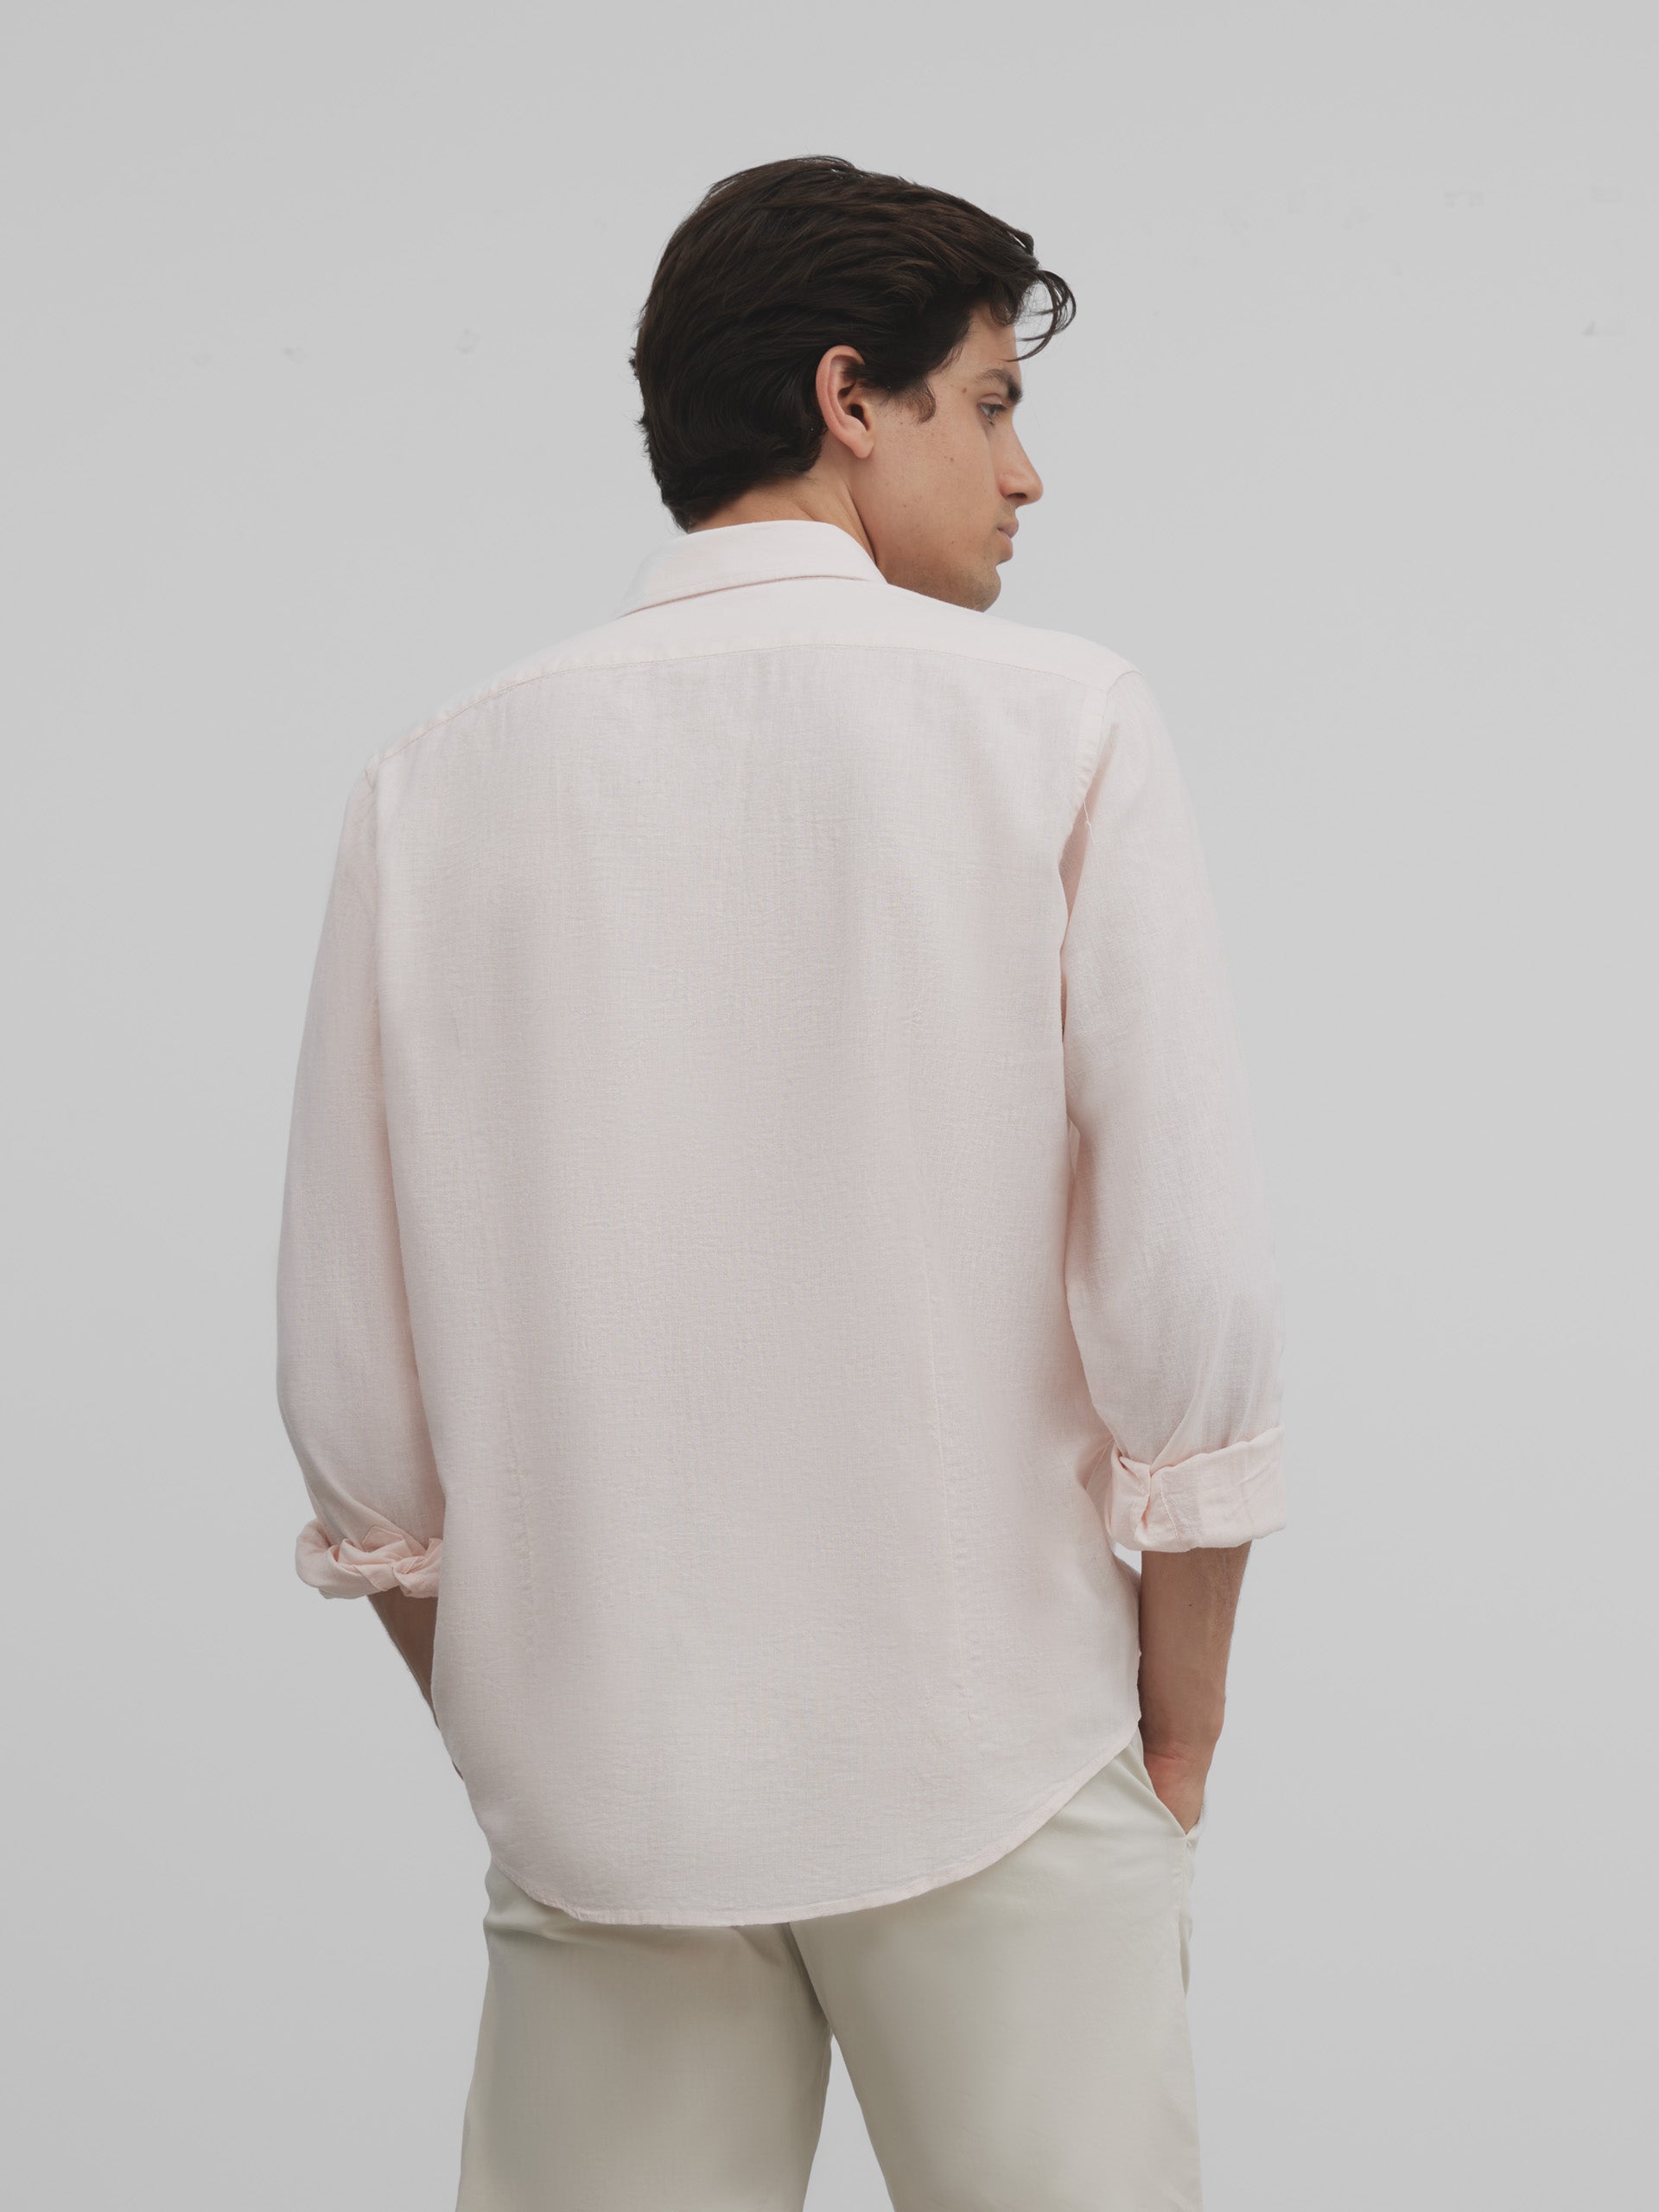 Camisa sport silbon soft rosa claro